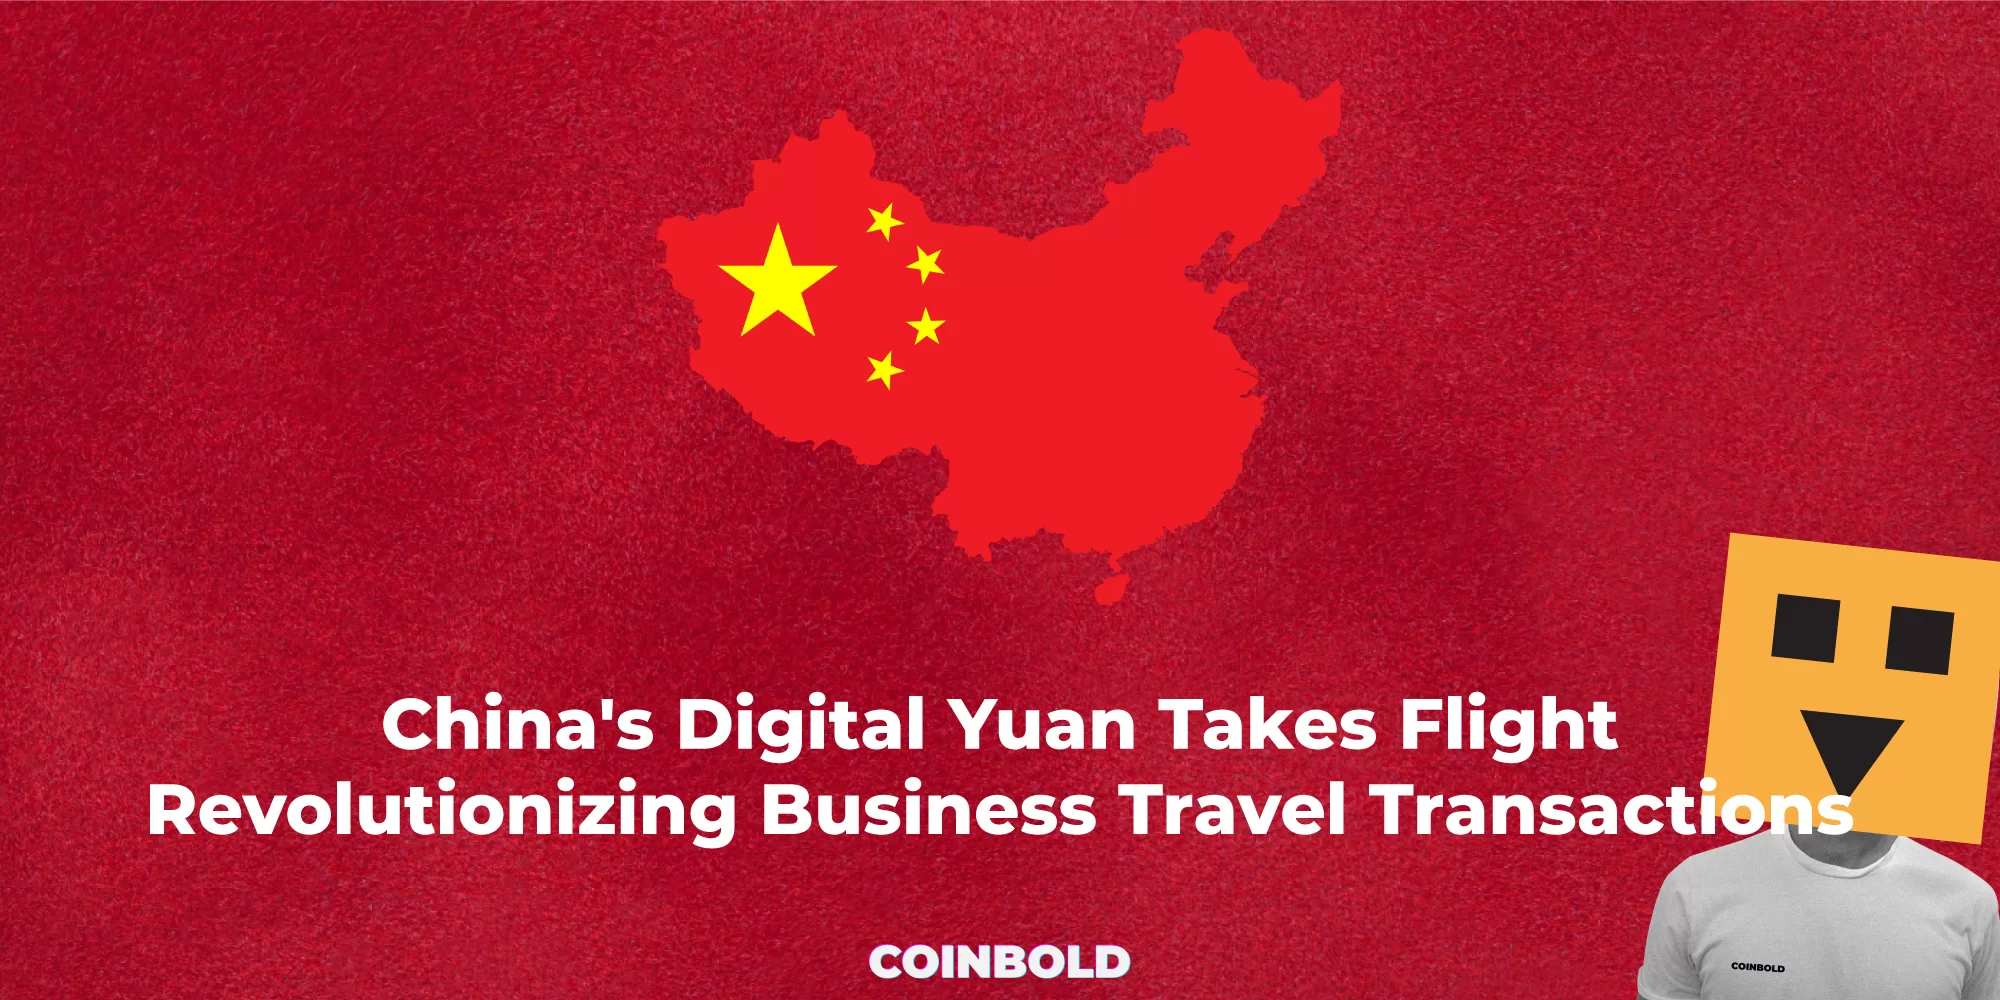 China's Digital Yuan Takes Flight, Revolutionizing Business Travel Transactions